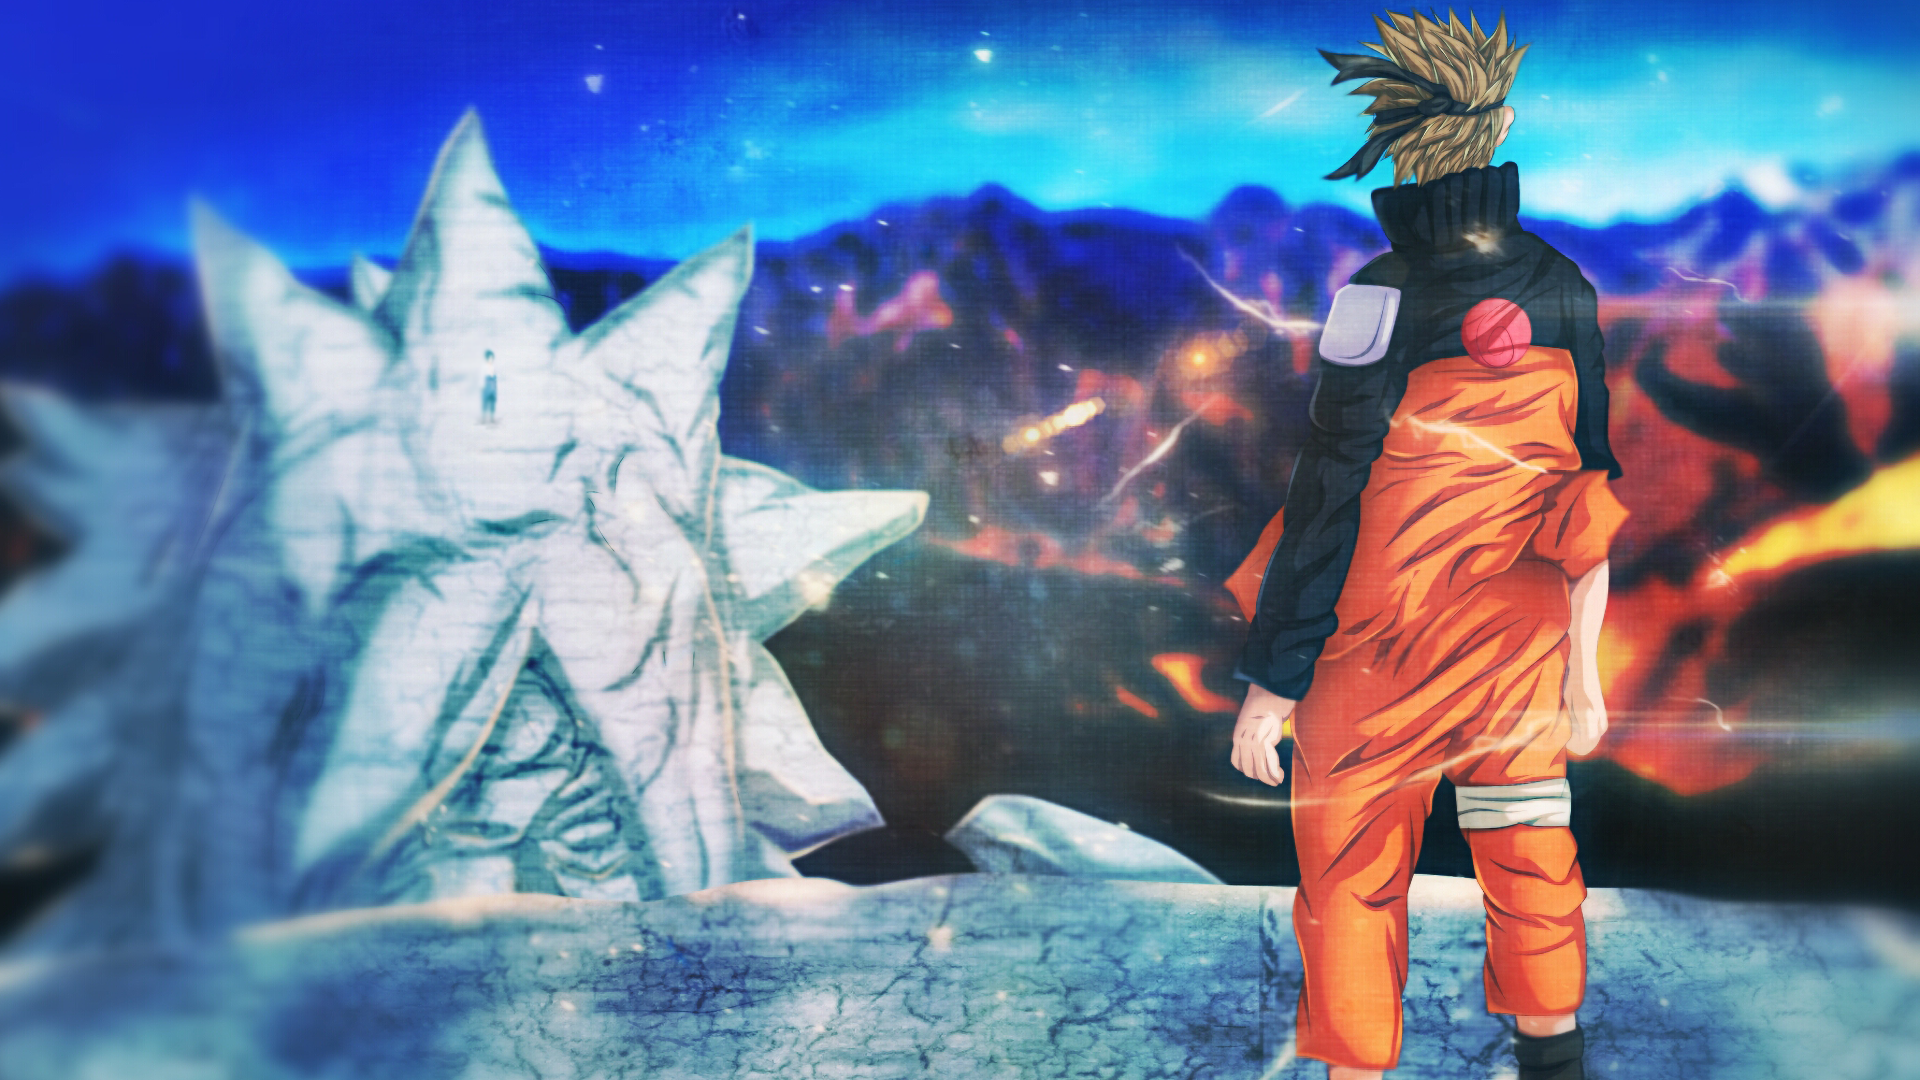  Naruto  vs Sasuke  HD Wallpaper  Background Image 